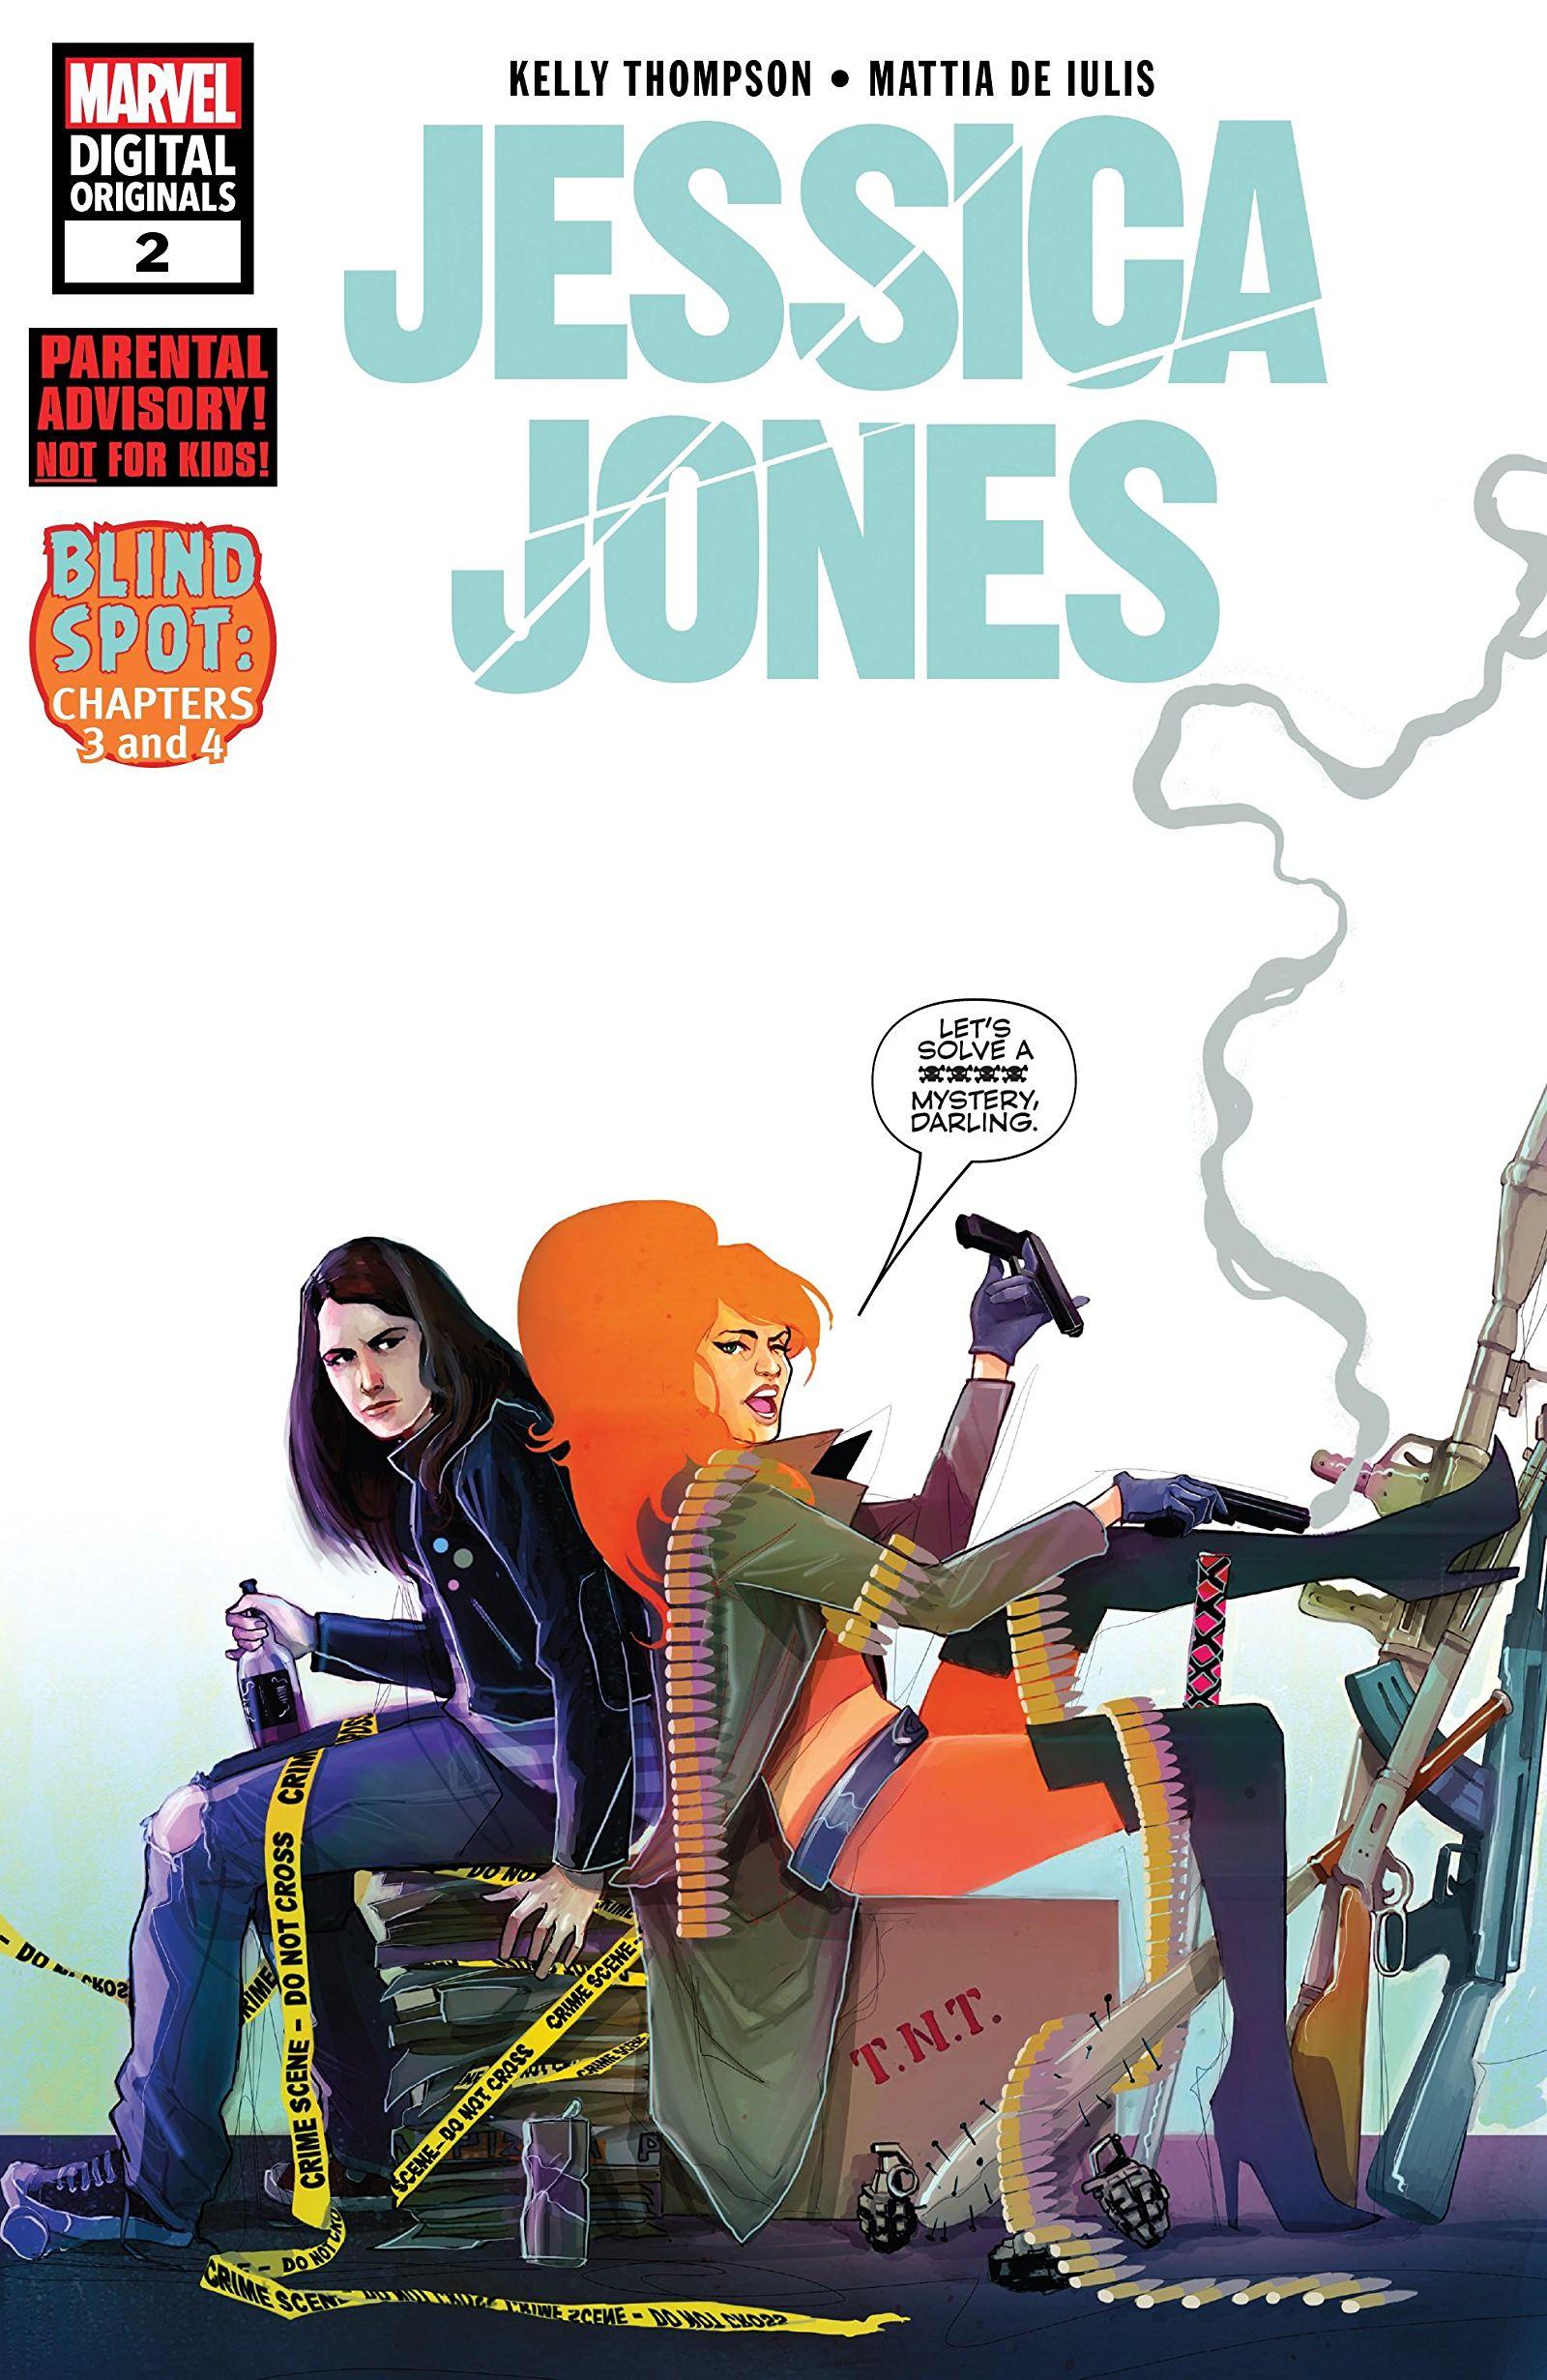 Jessica Jones - Marvel Digital Original Vol. 1 #2